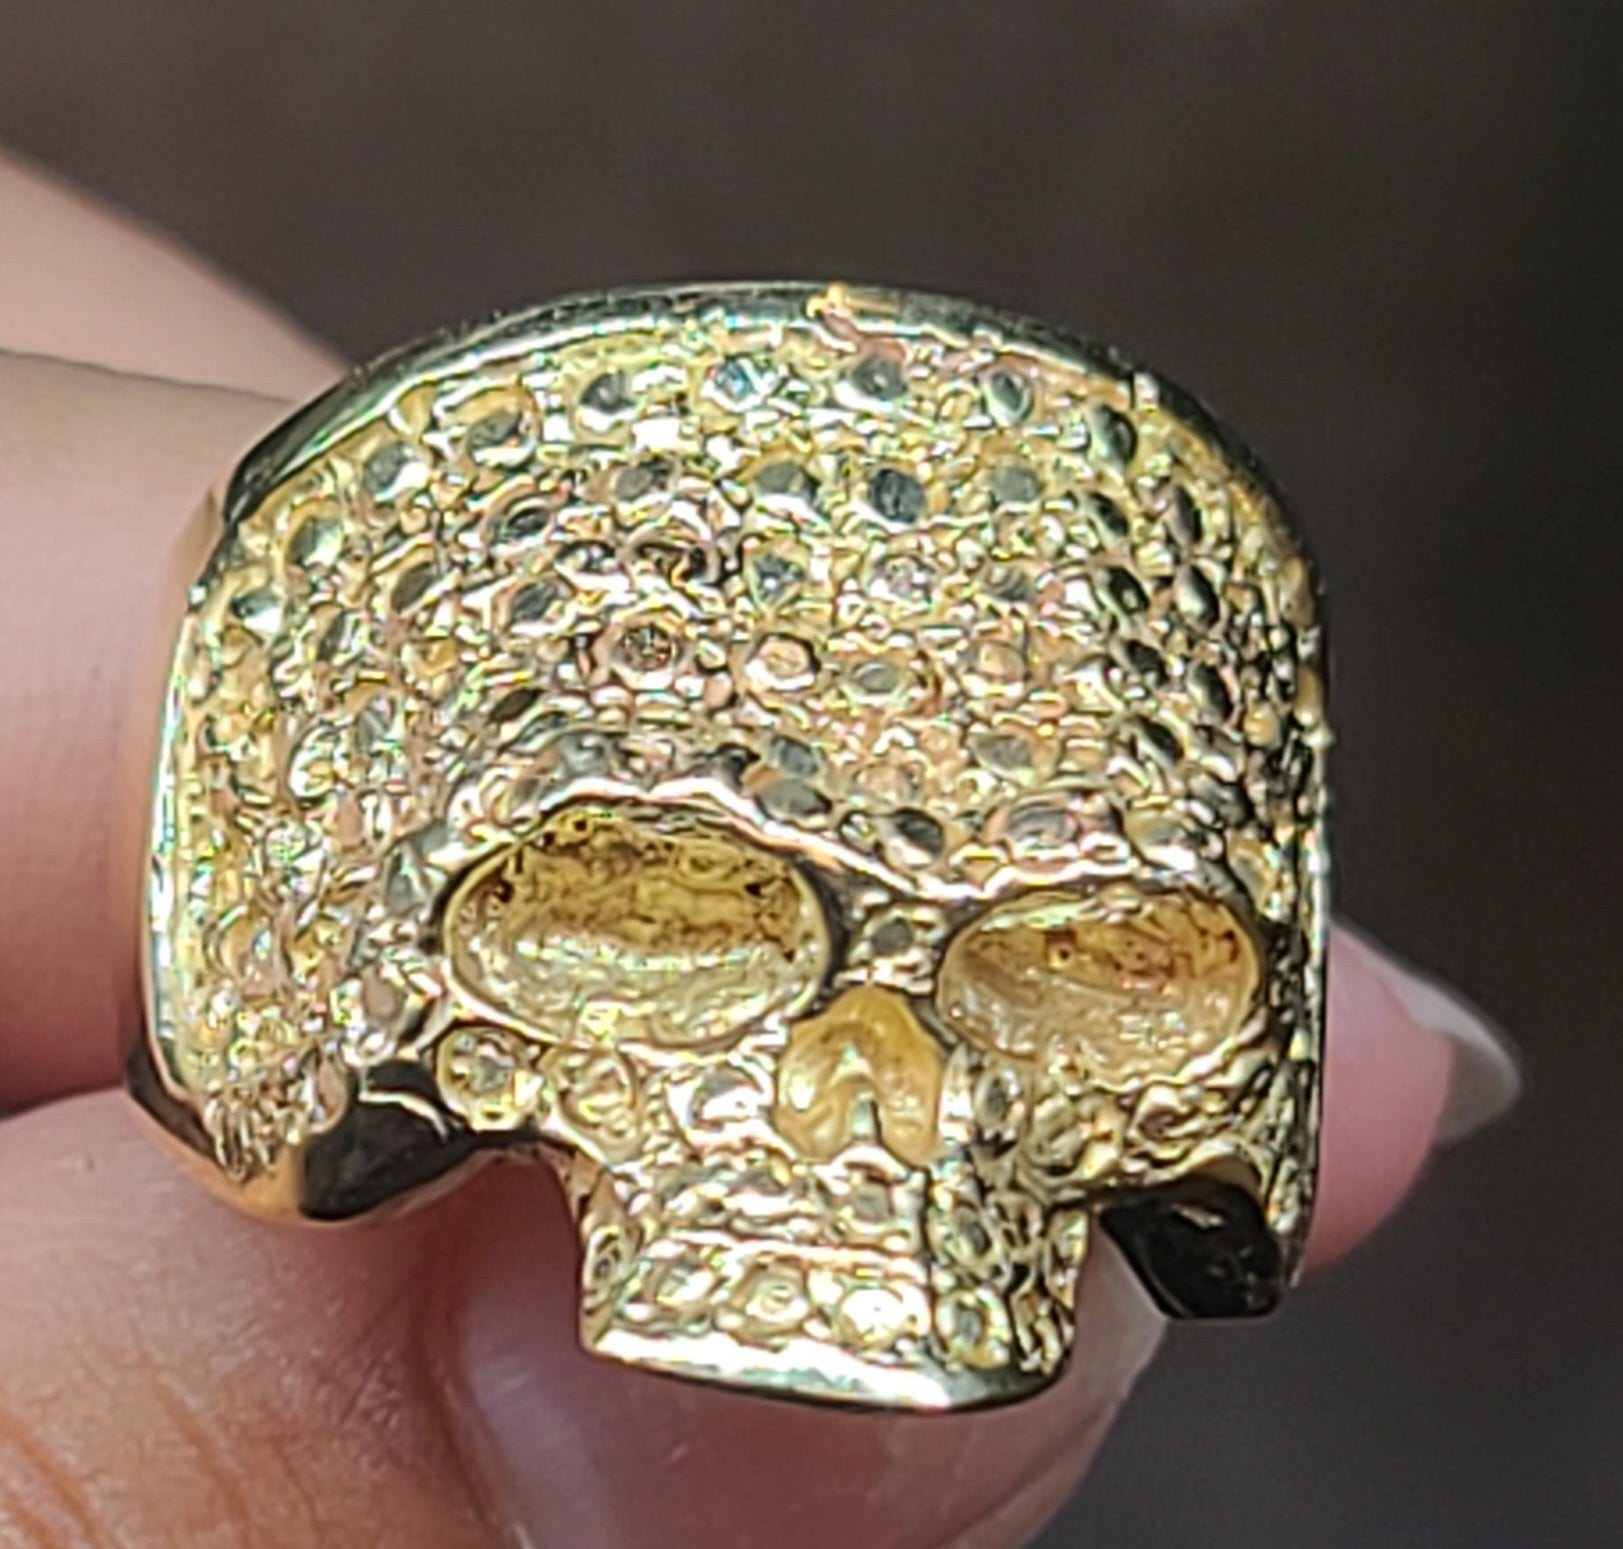 Yellow Gold Textured Skull Ring